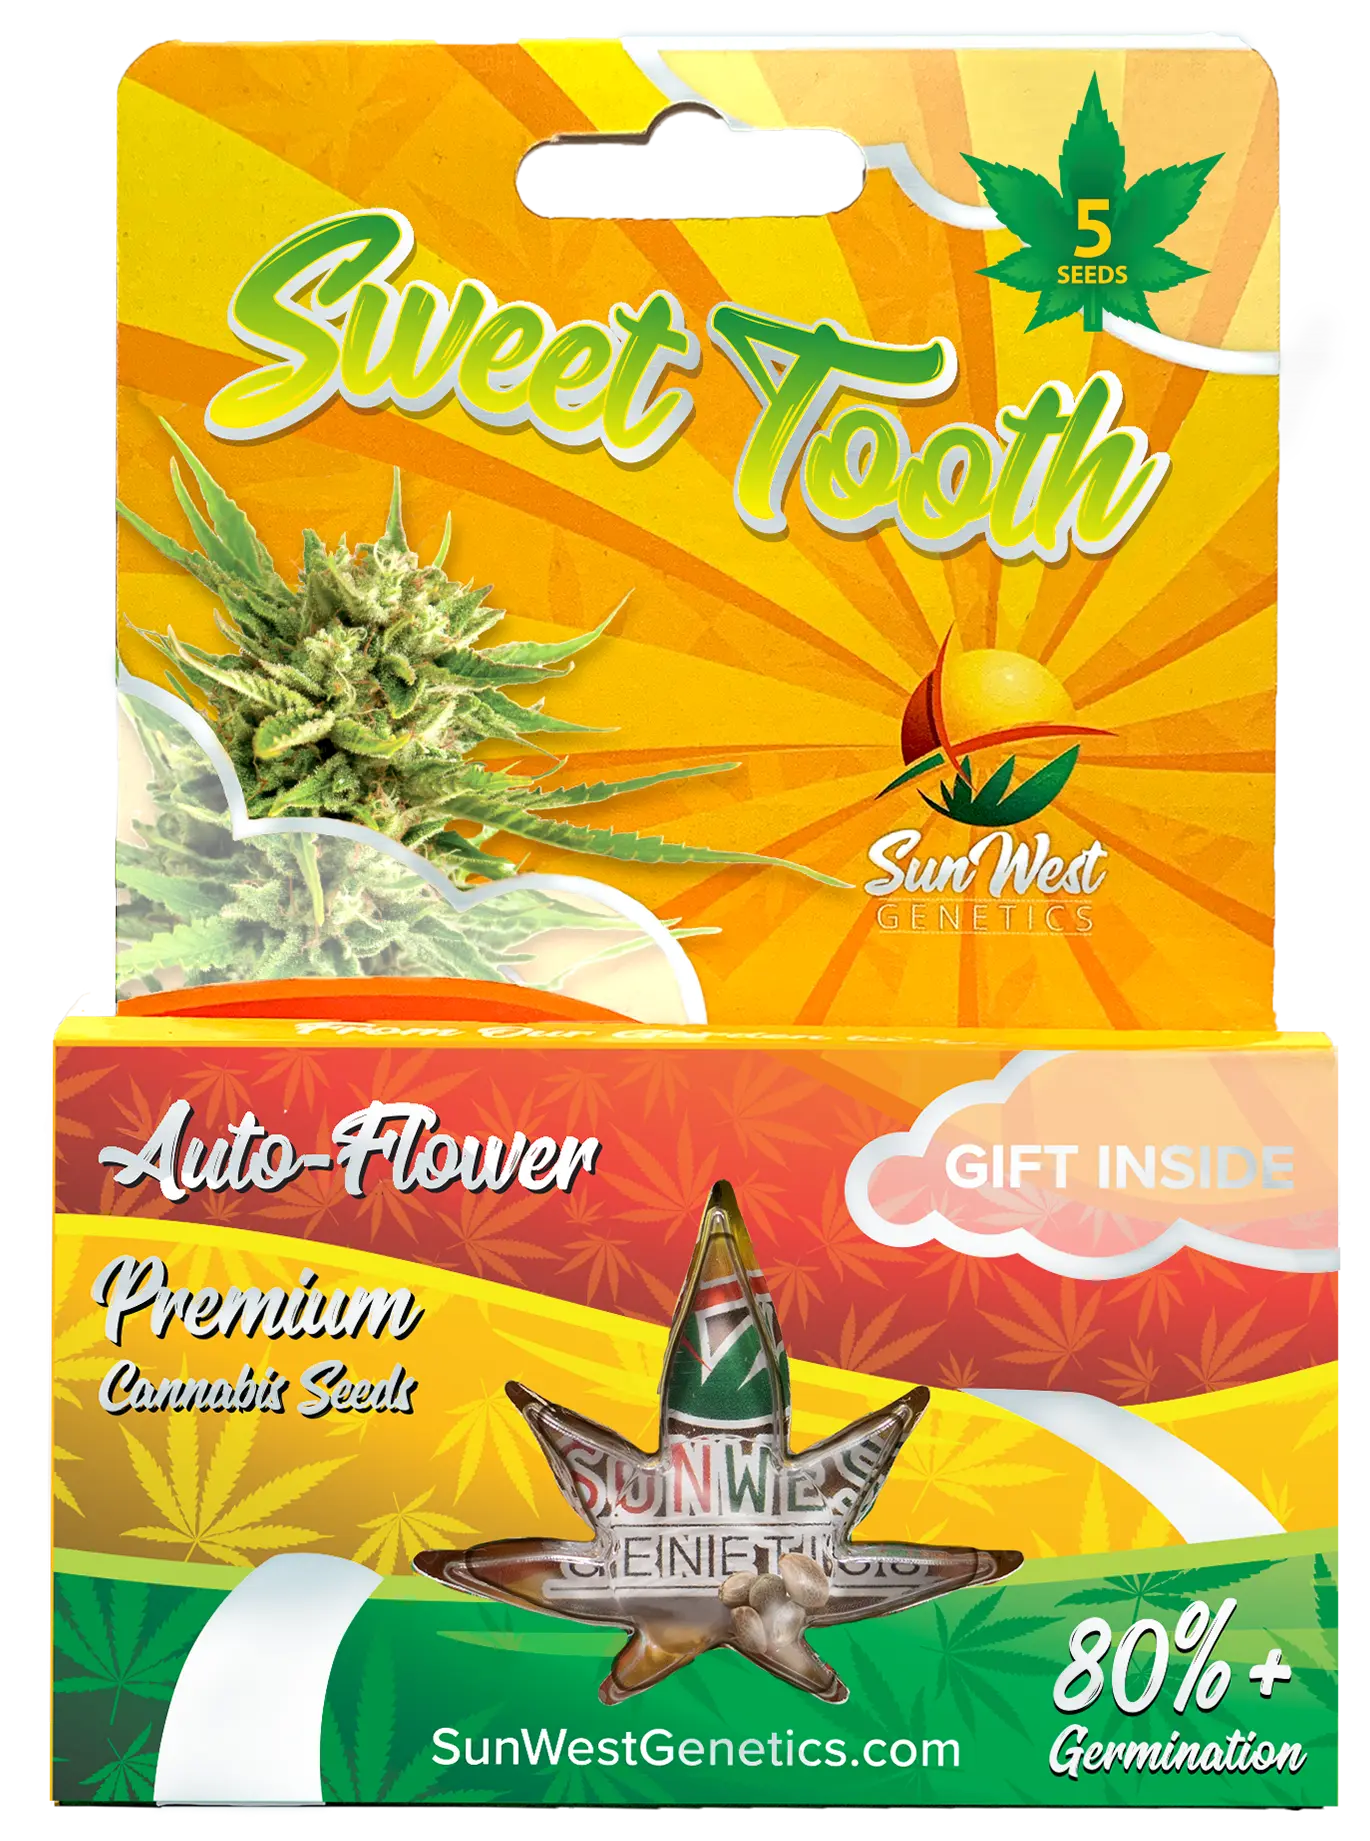 Sunwest Genetics Sweet Tooth Autoflowering Cannabis Seeds, Pack of 5 Sunwest Genetics